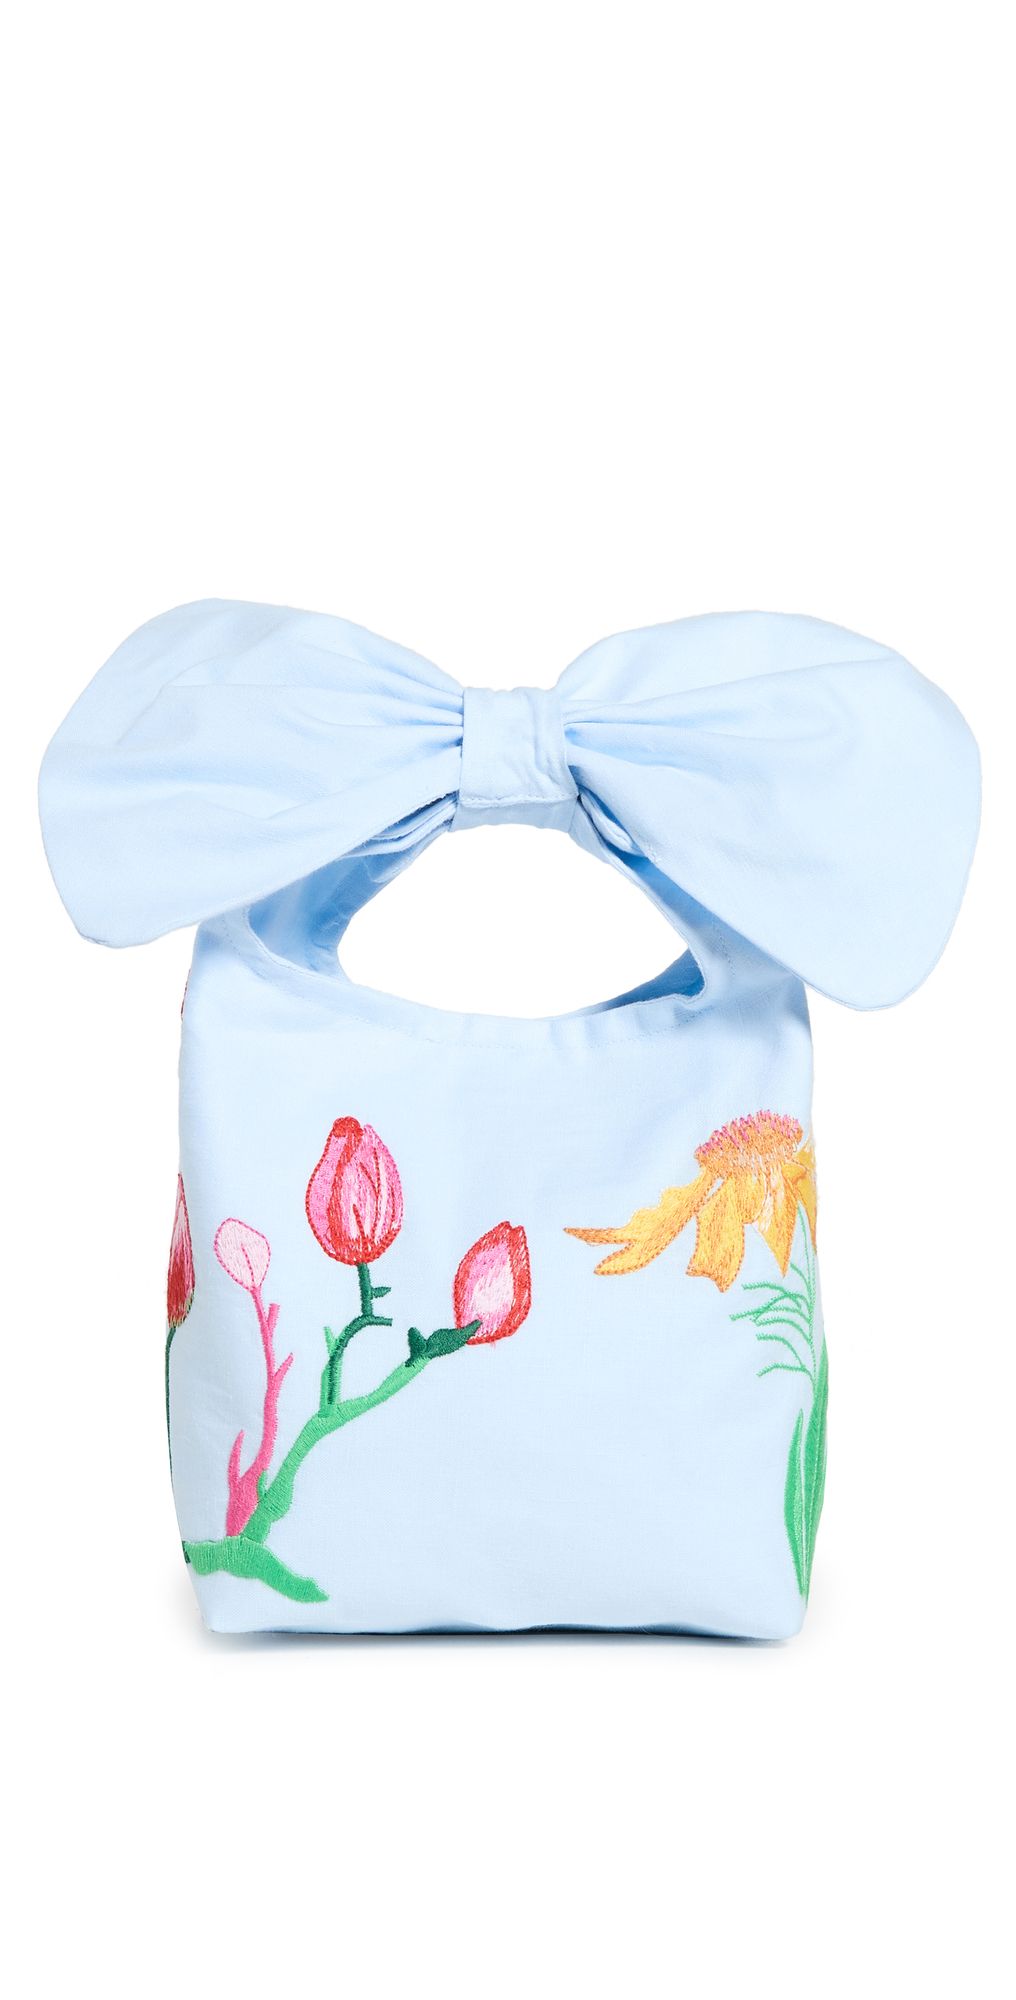 Spring Pouchette Handbag | Shopbop